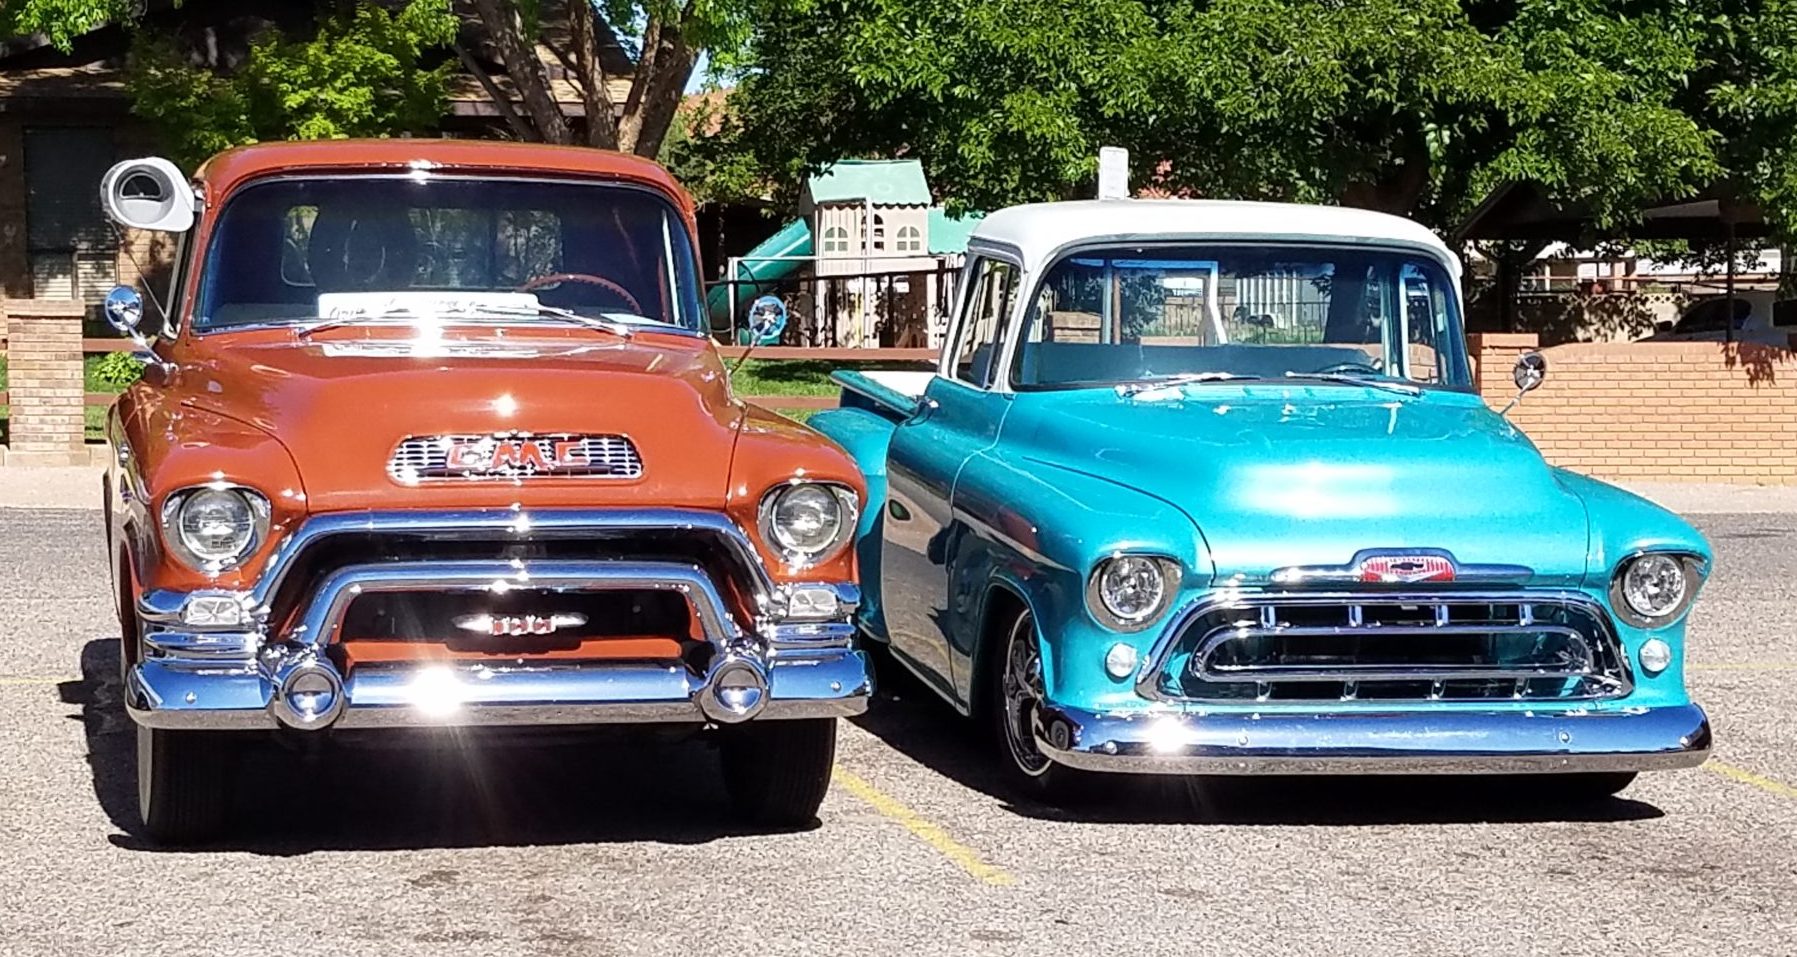 dark orange and bright blue vintage cars parked